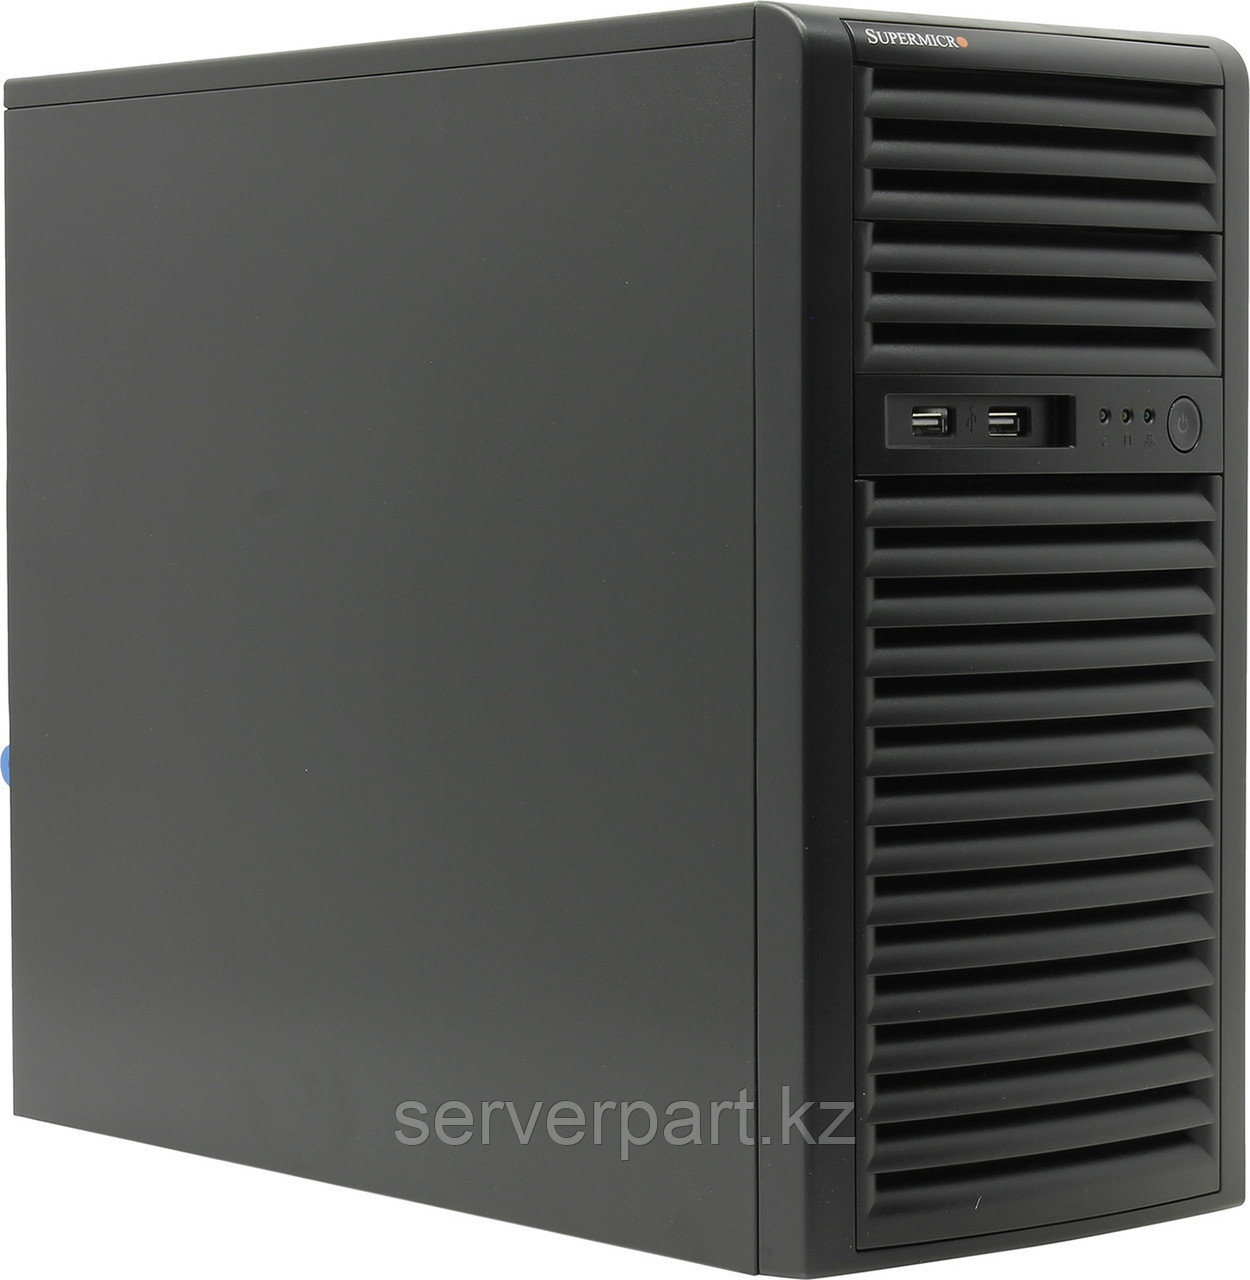 Сервер Supermicro SYS-5039C Tower 4LFF/4-core intel xeon E2124 3.3GHz/48GB EUDIMM/1x240GB SSD MU Hyb